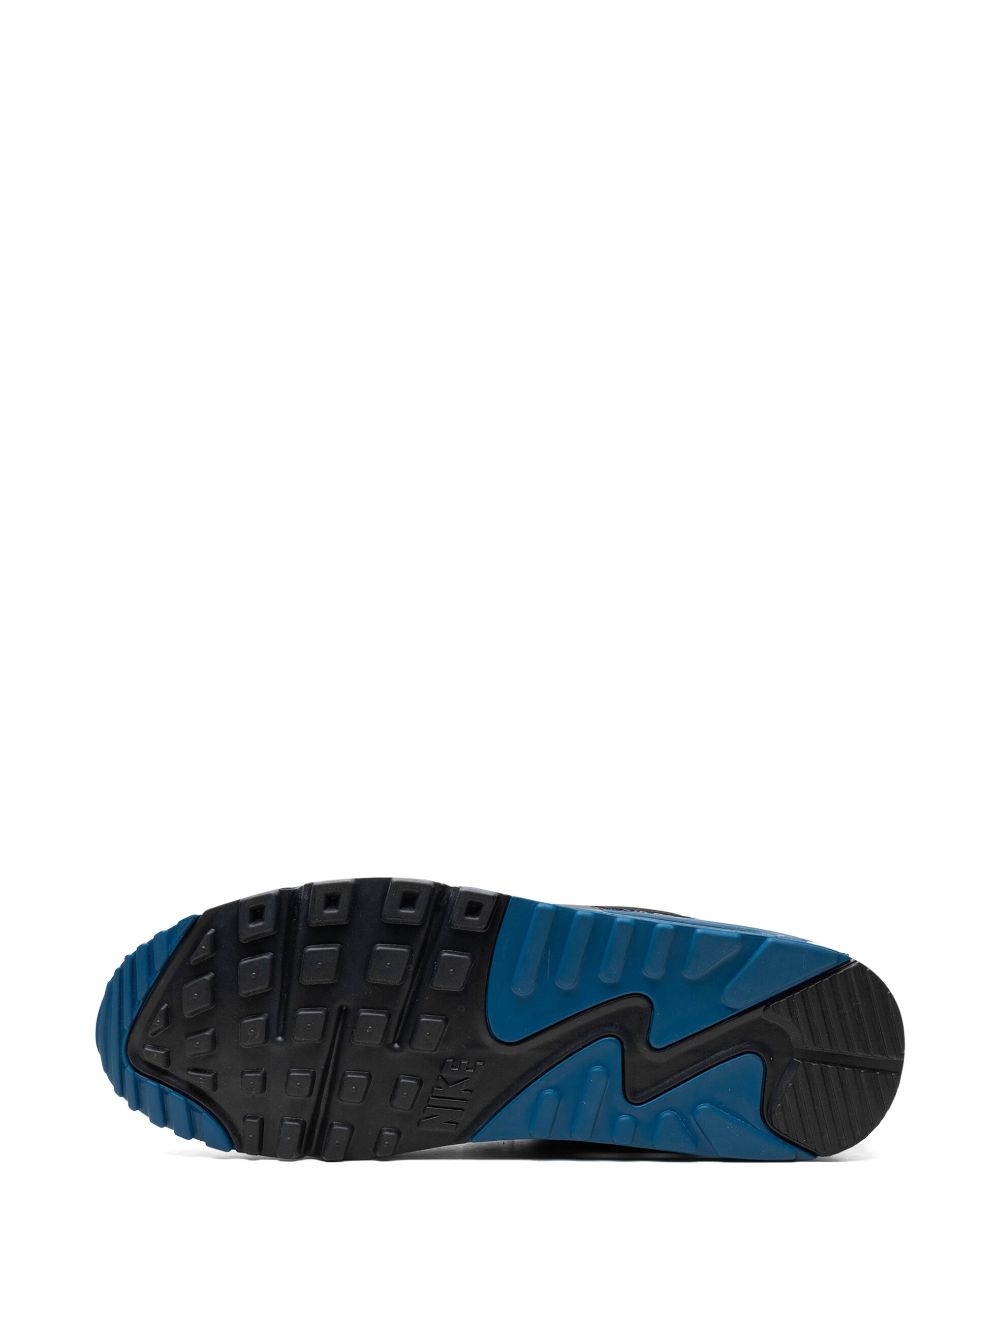 Shop Nike Air Max 90 "black/teal Blue" Sneakers